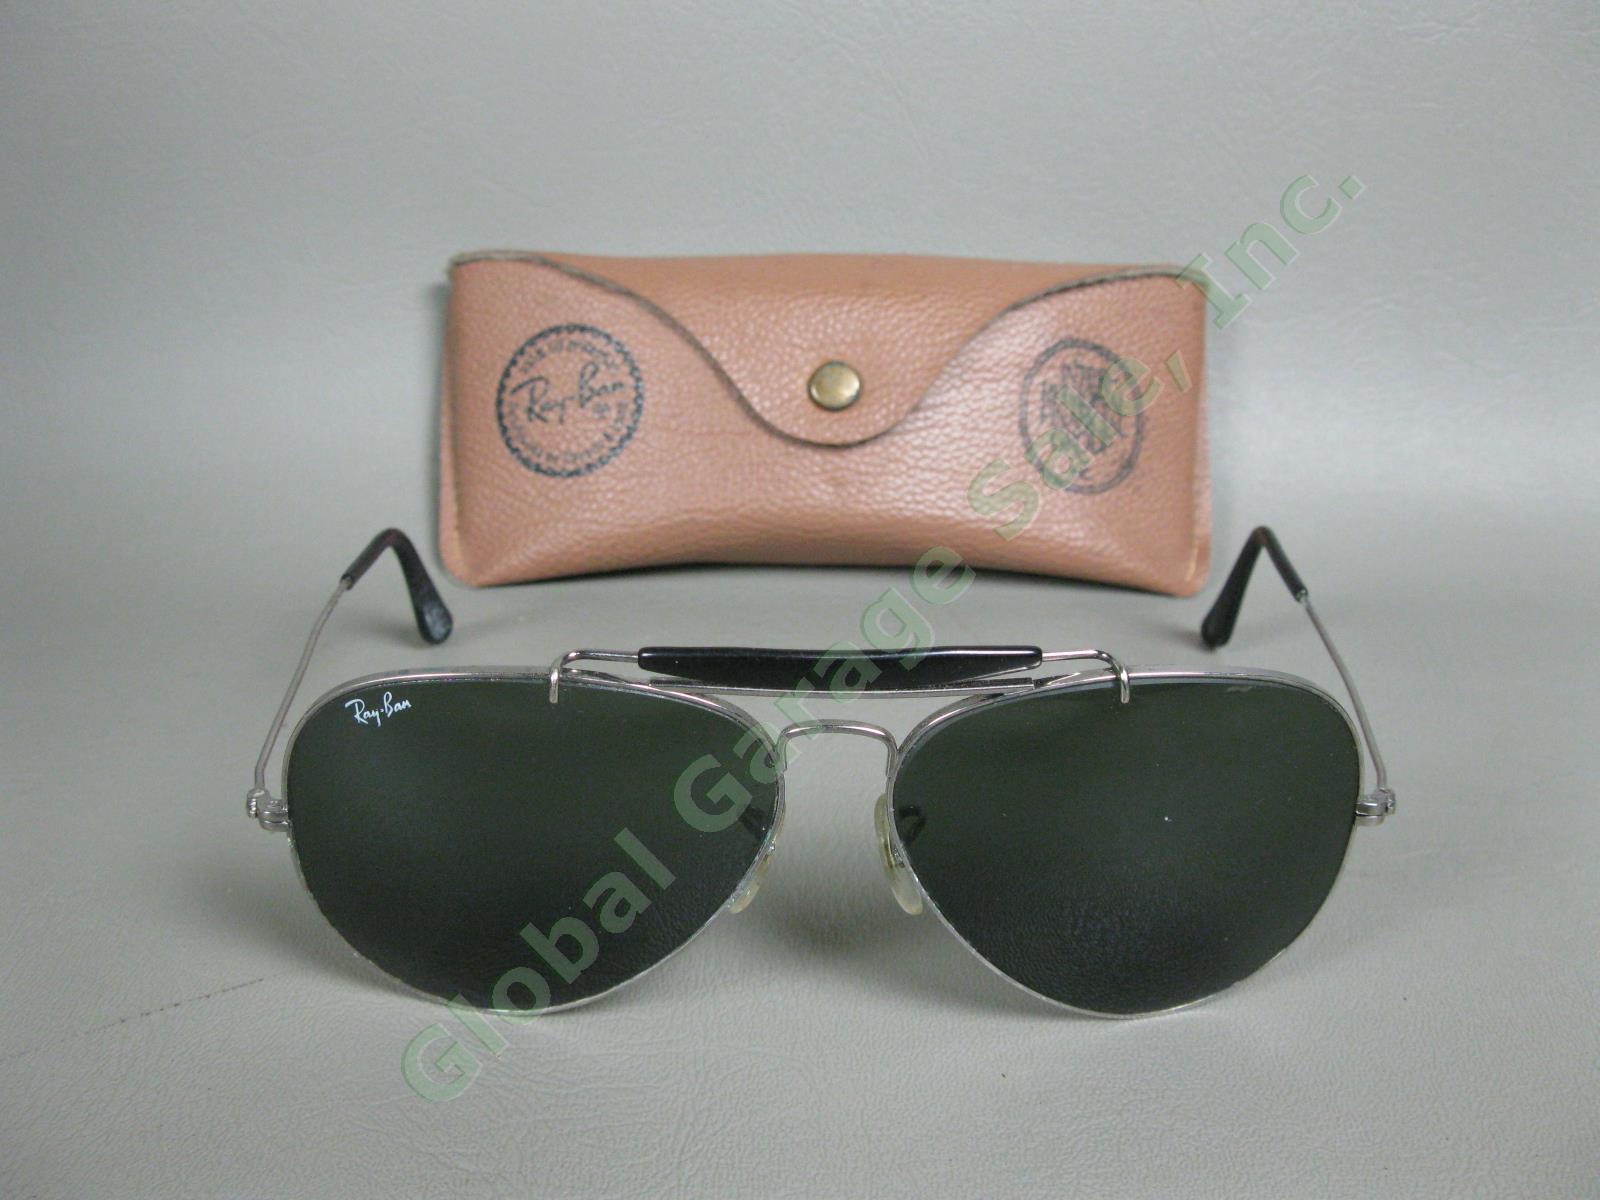 Vtg Bausch + Lomb Ray-Ban Large Aviator Sunglasses 62-14 Green Lenses w/ Case